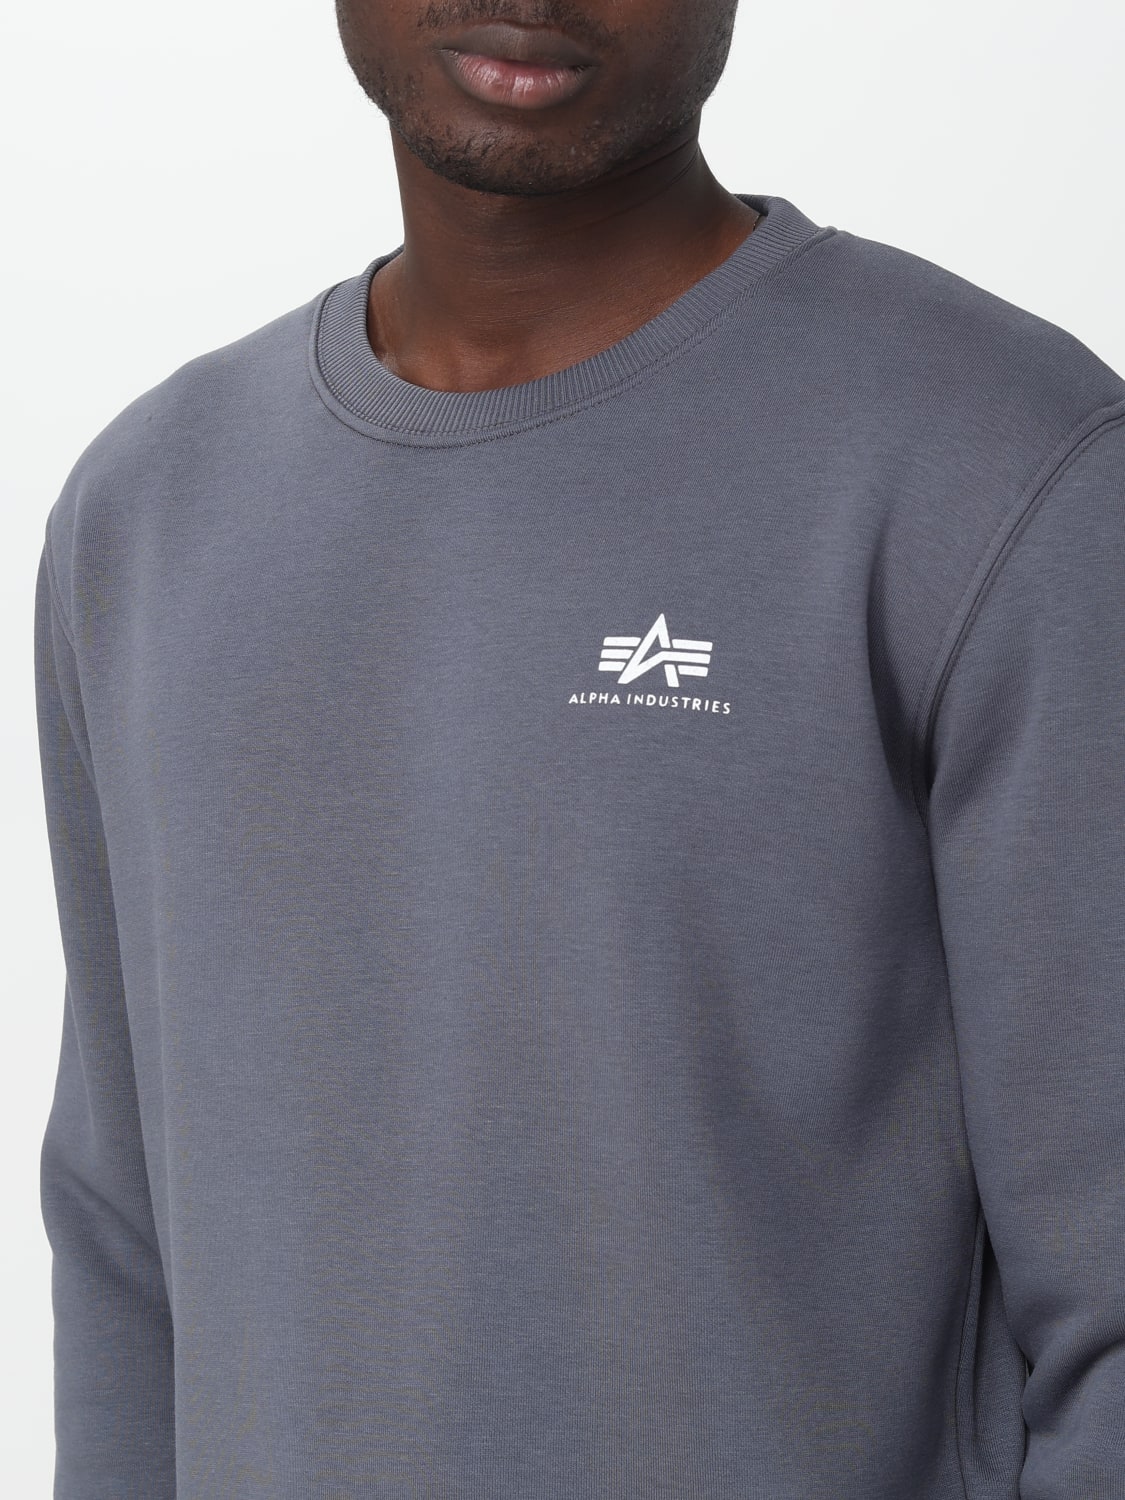 ALPHA INDUSTRIES: sweatshirt for man - Grey | Alpha Industries sweatshirt  188307 online at